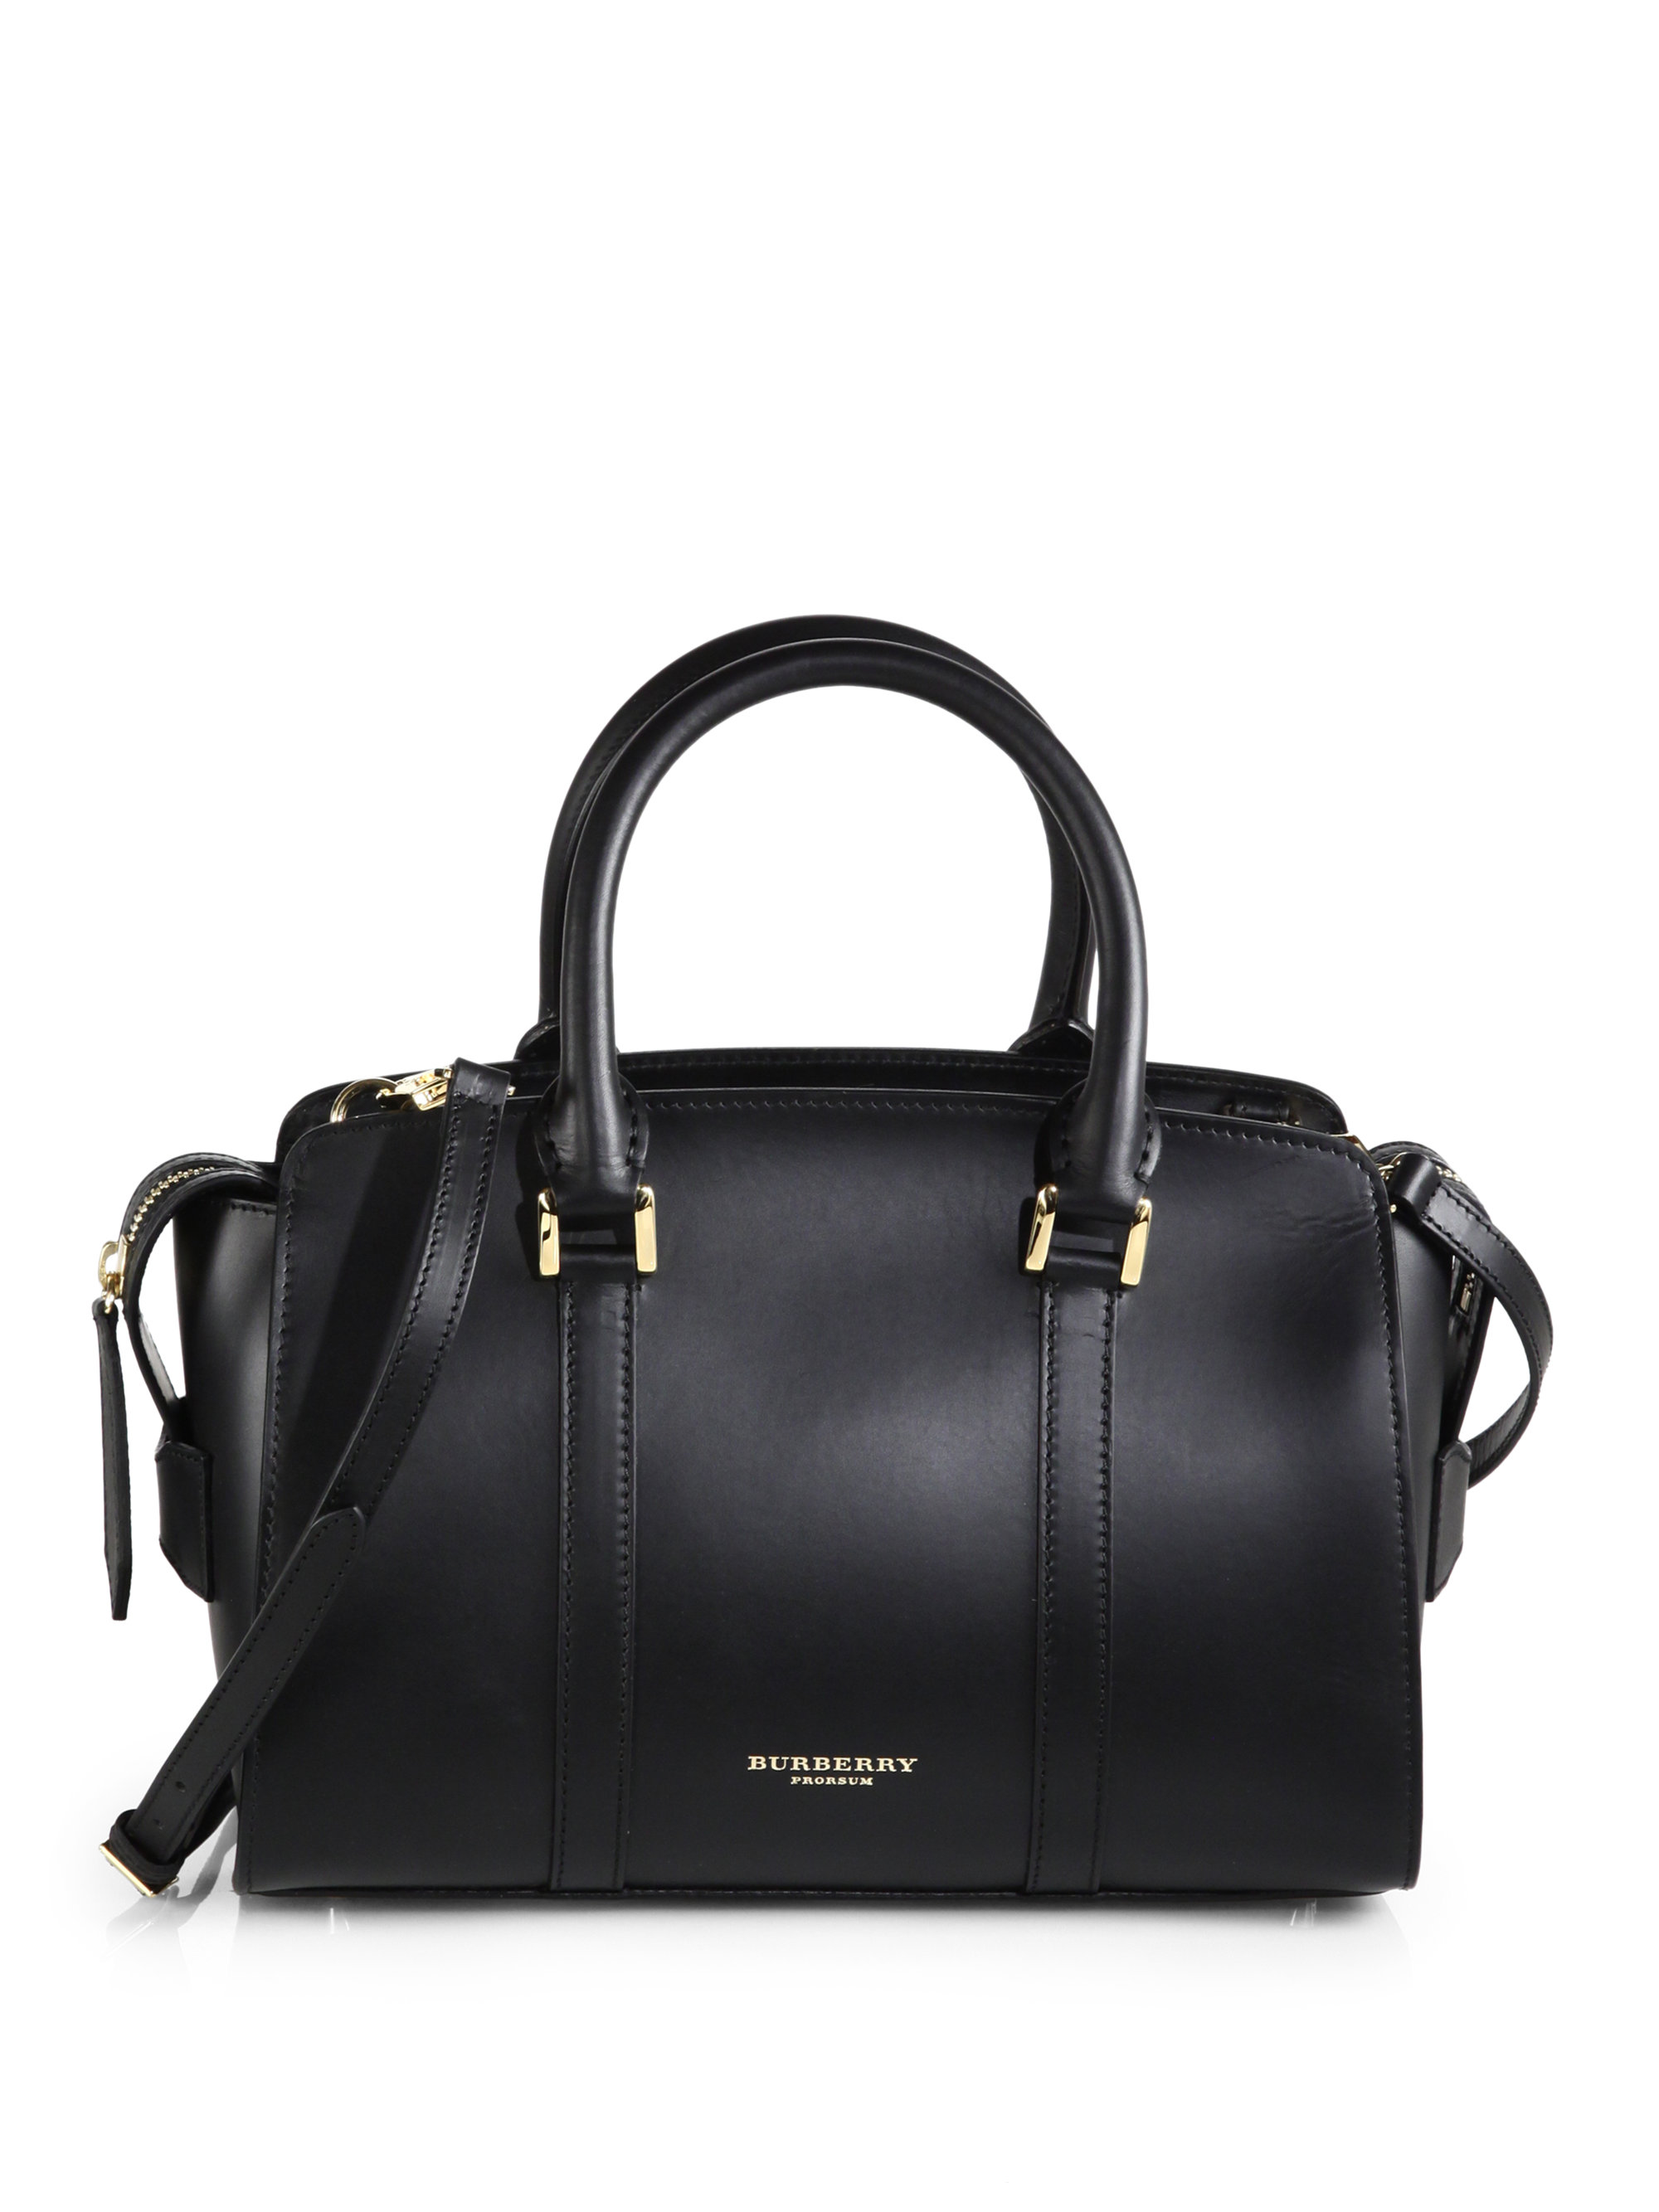 Burberry Prorsum Welney Sartorial Leather Bag in Black | Lyst